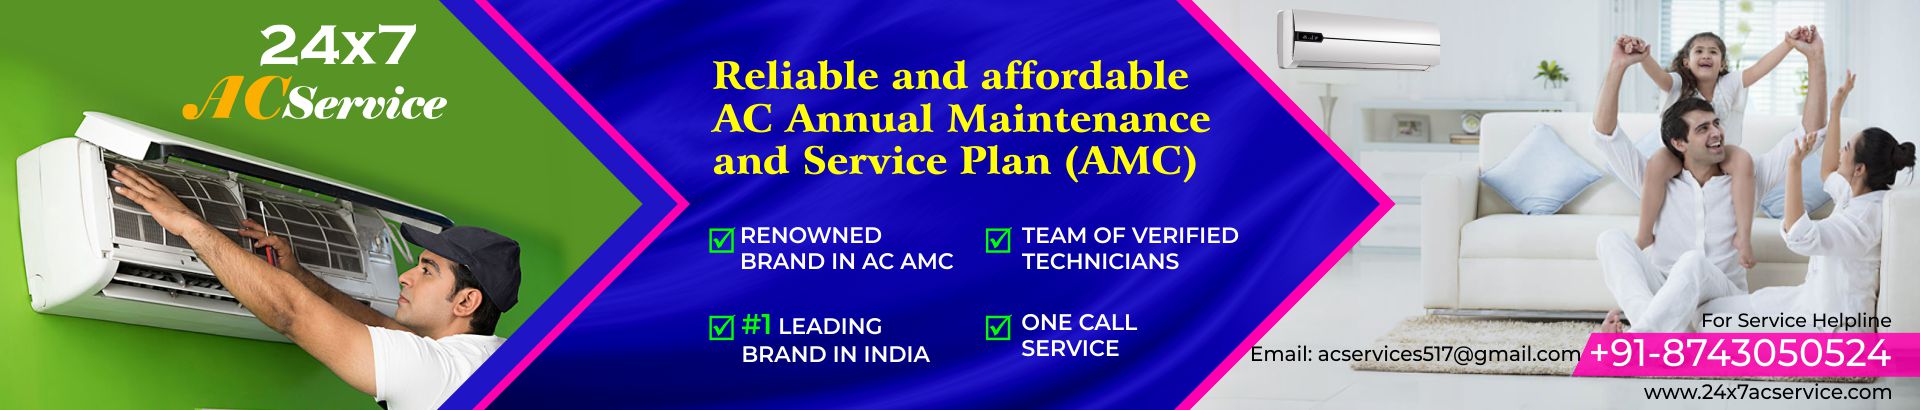 ac annual maintenance service